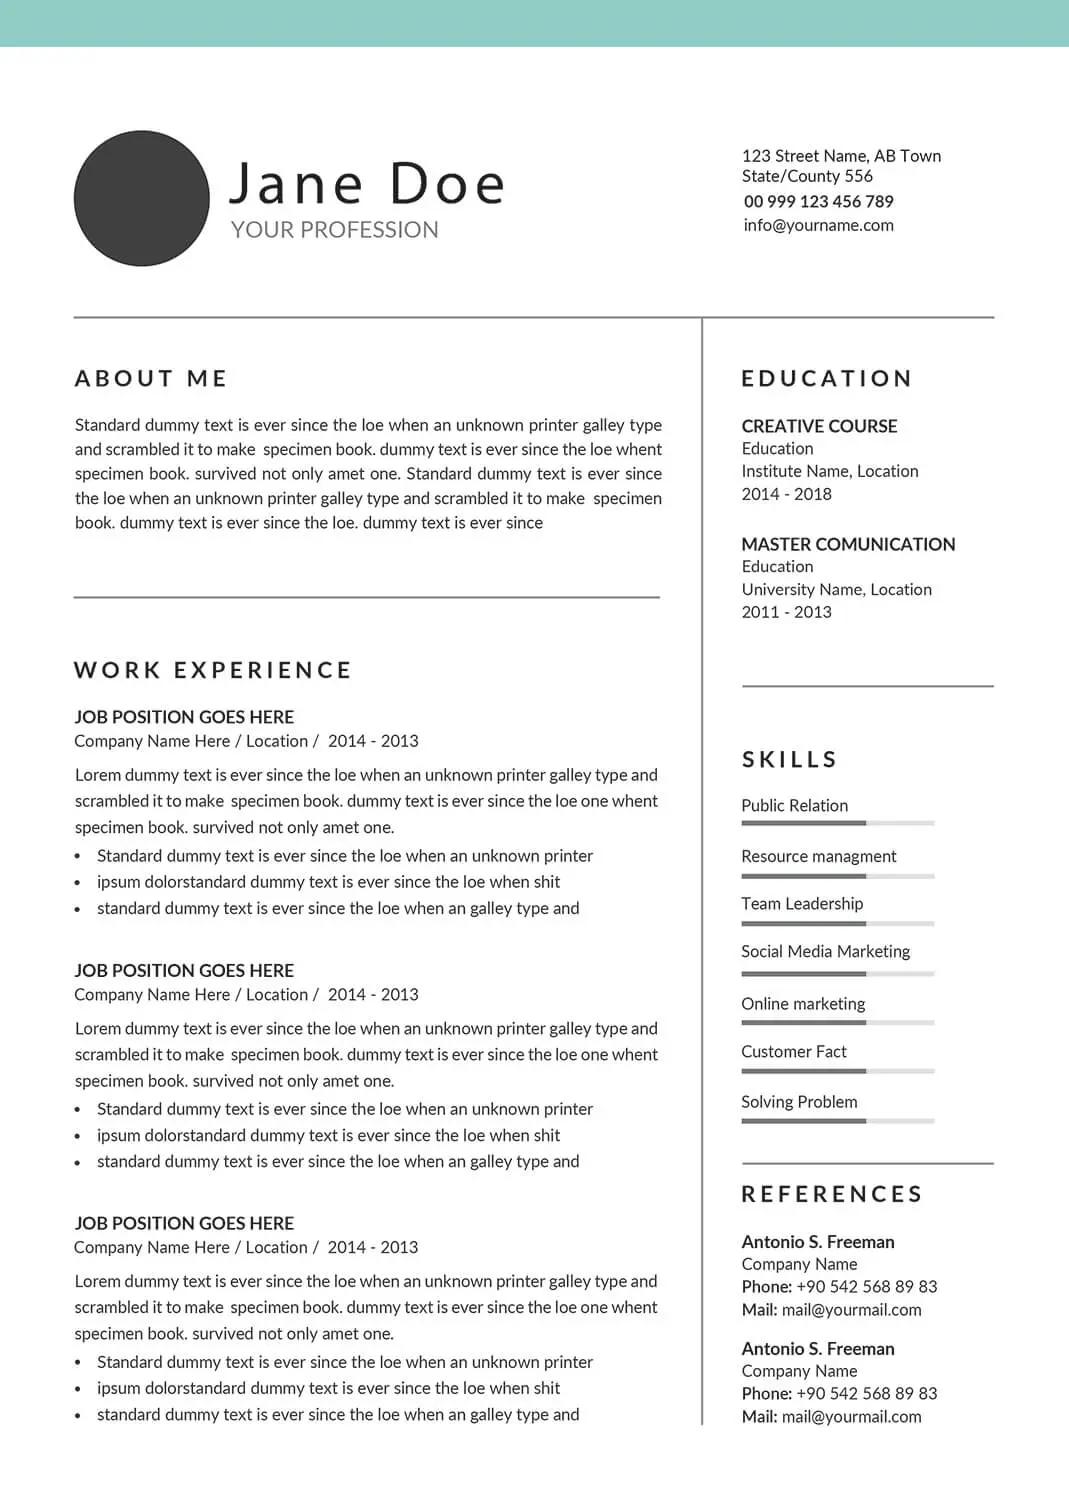 content-writer-resume